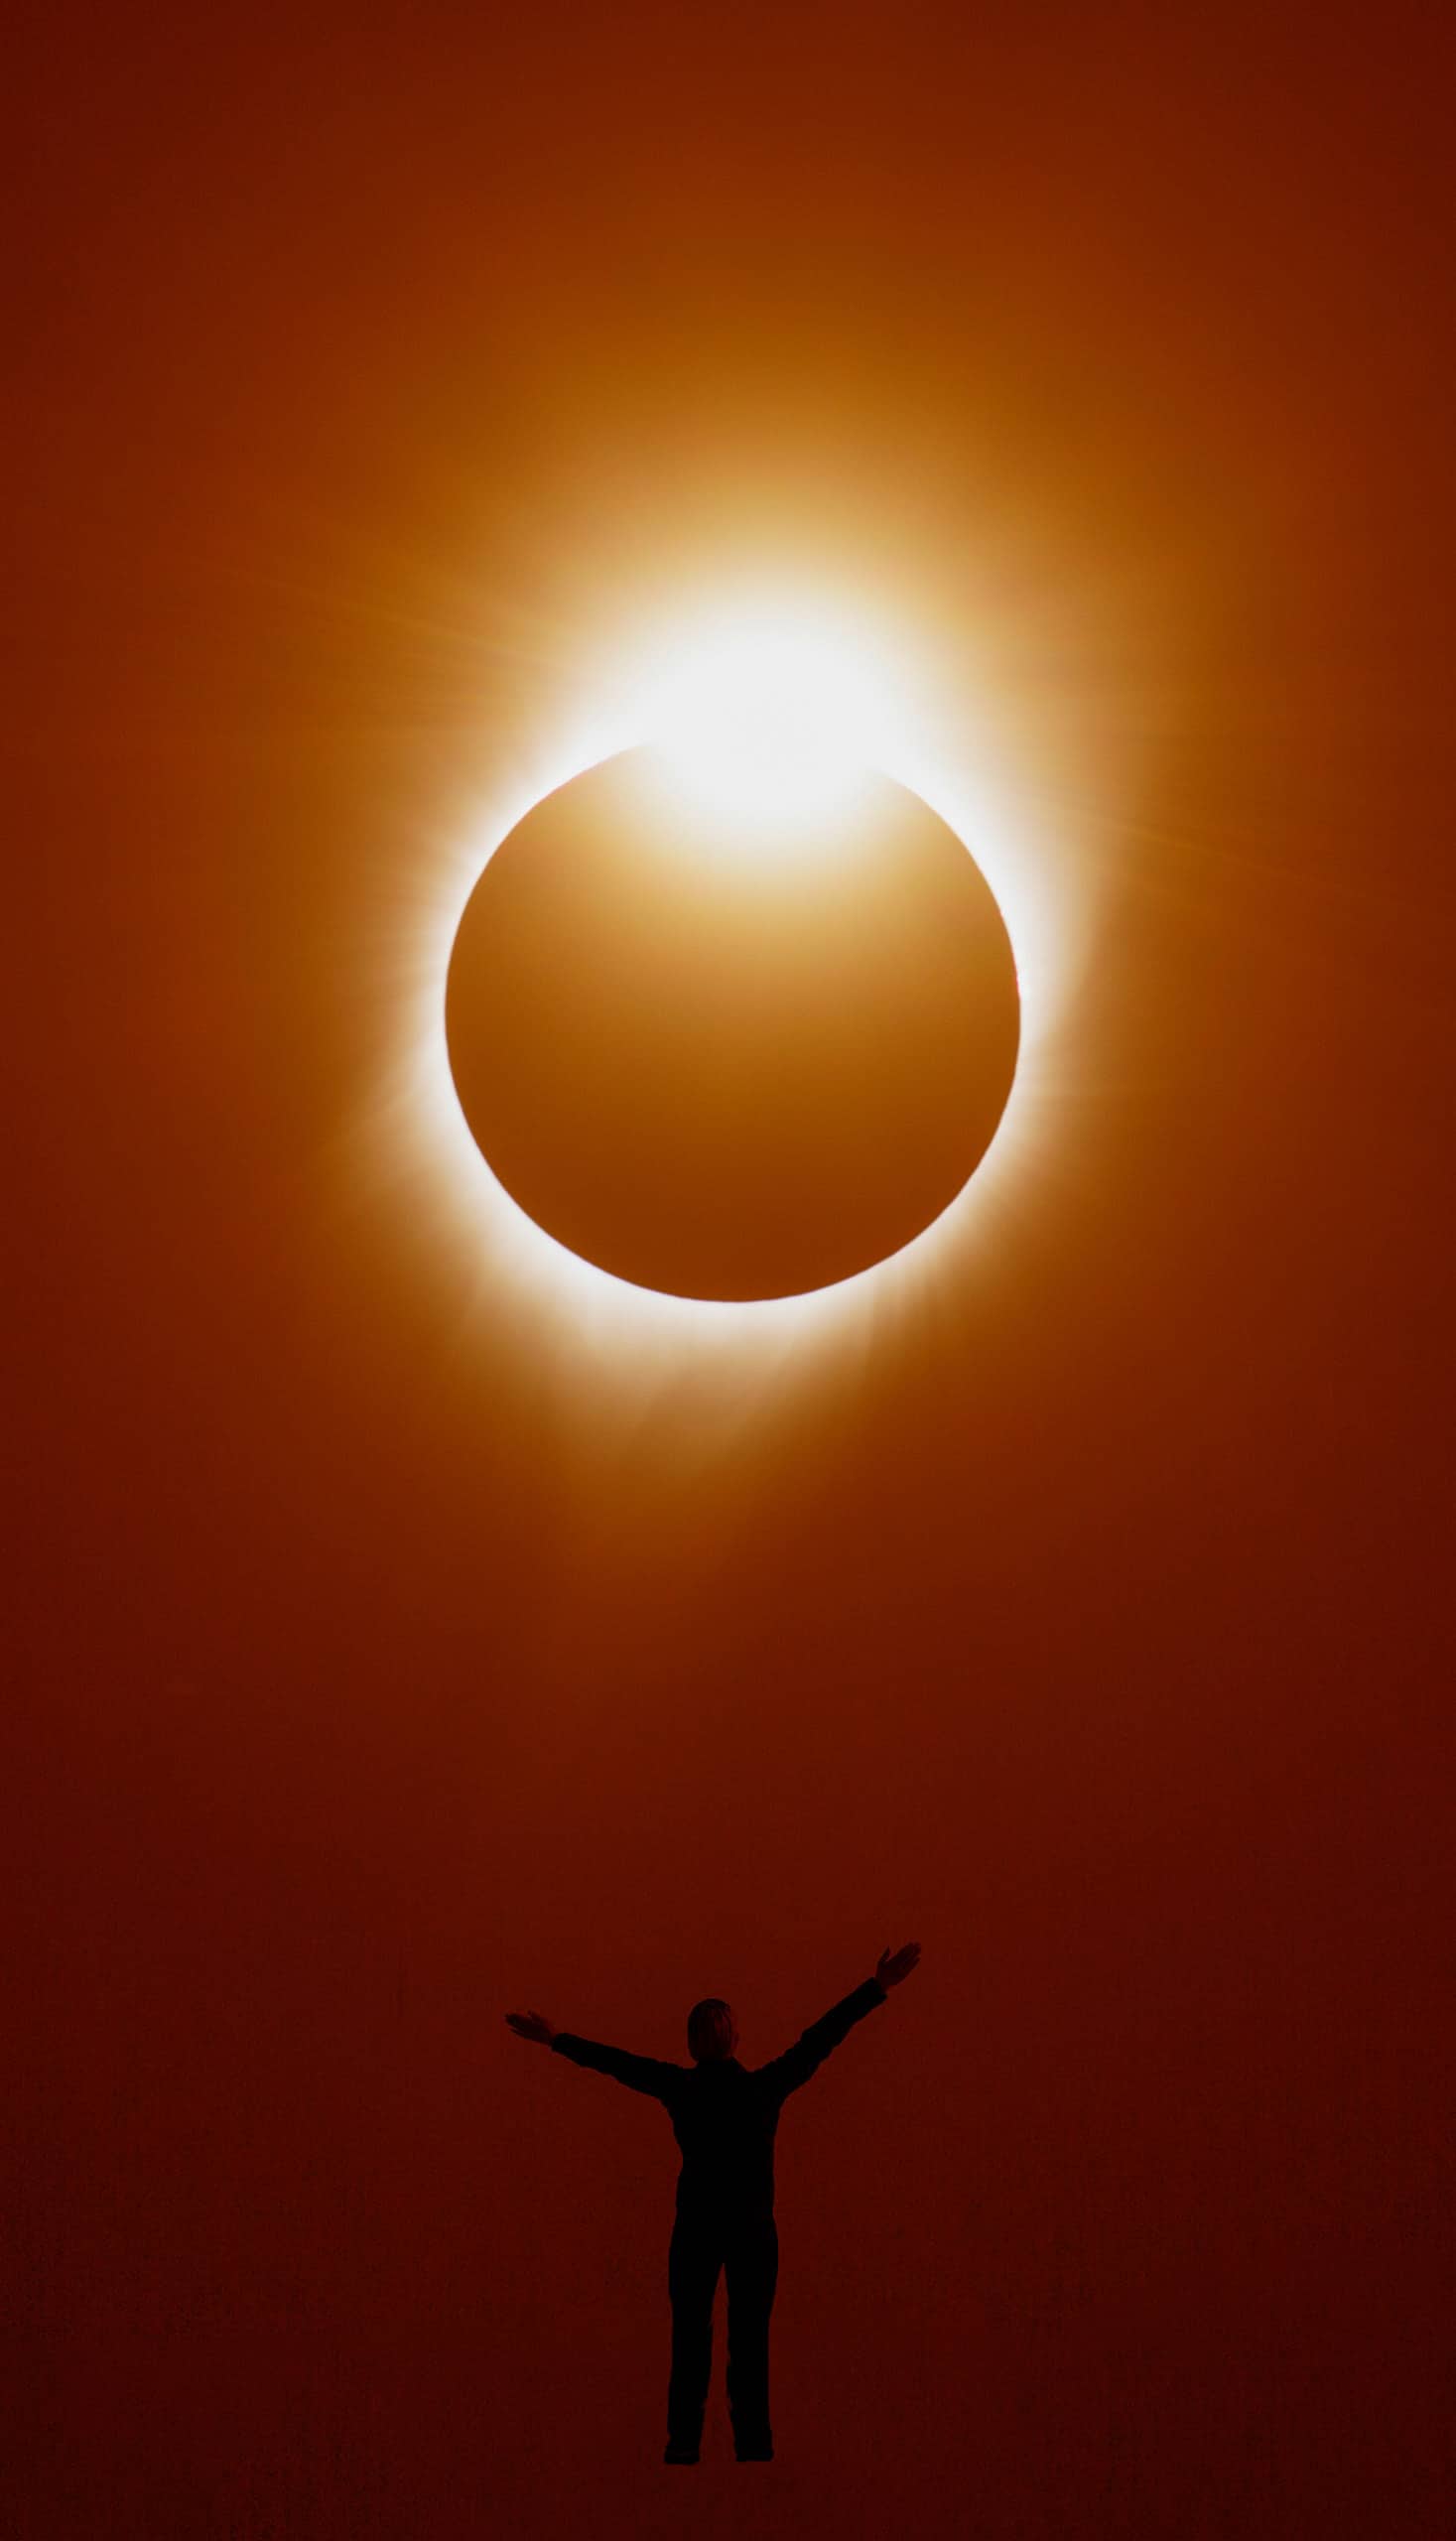 Woman enjoying sight of a solar eclipse.